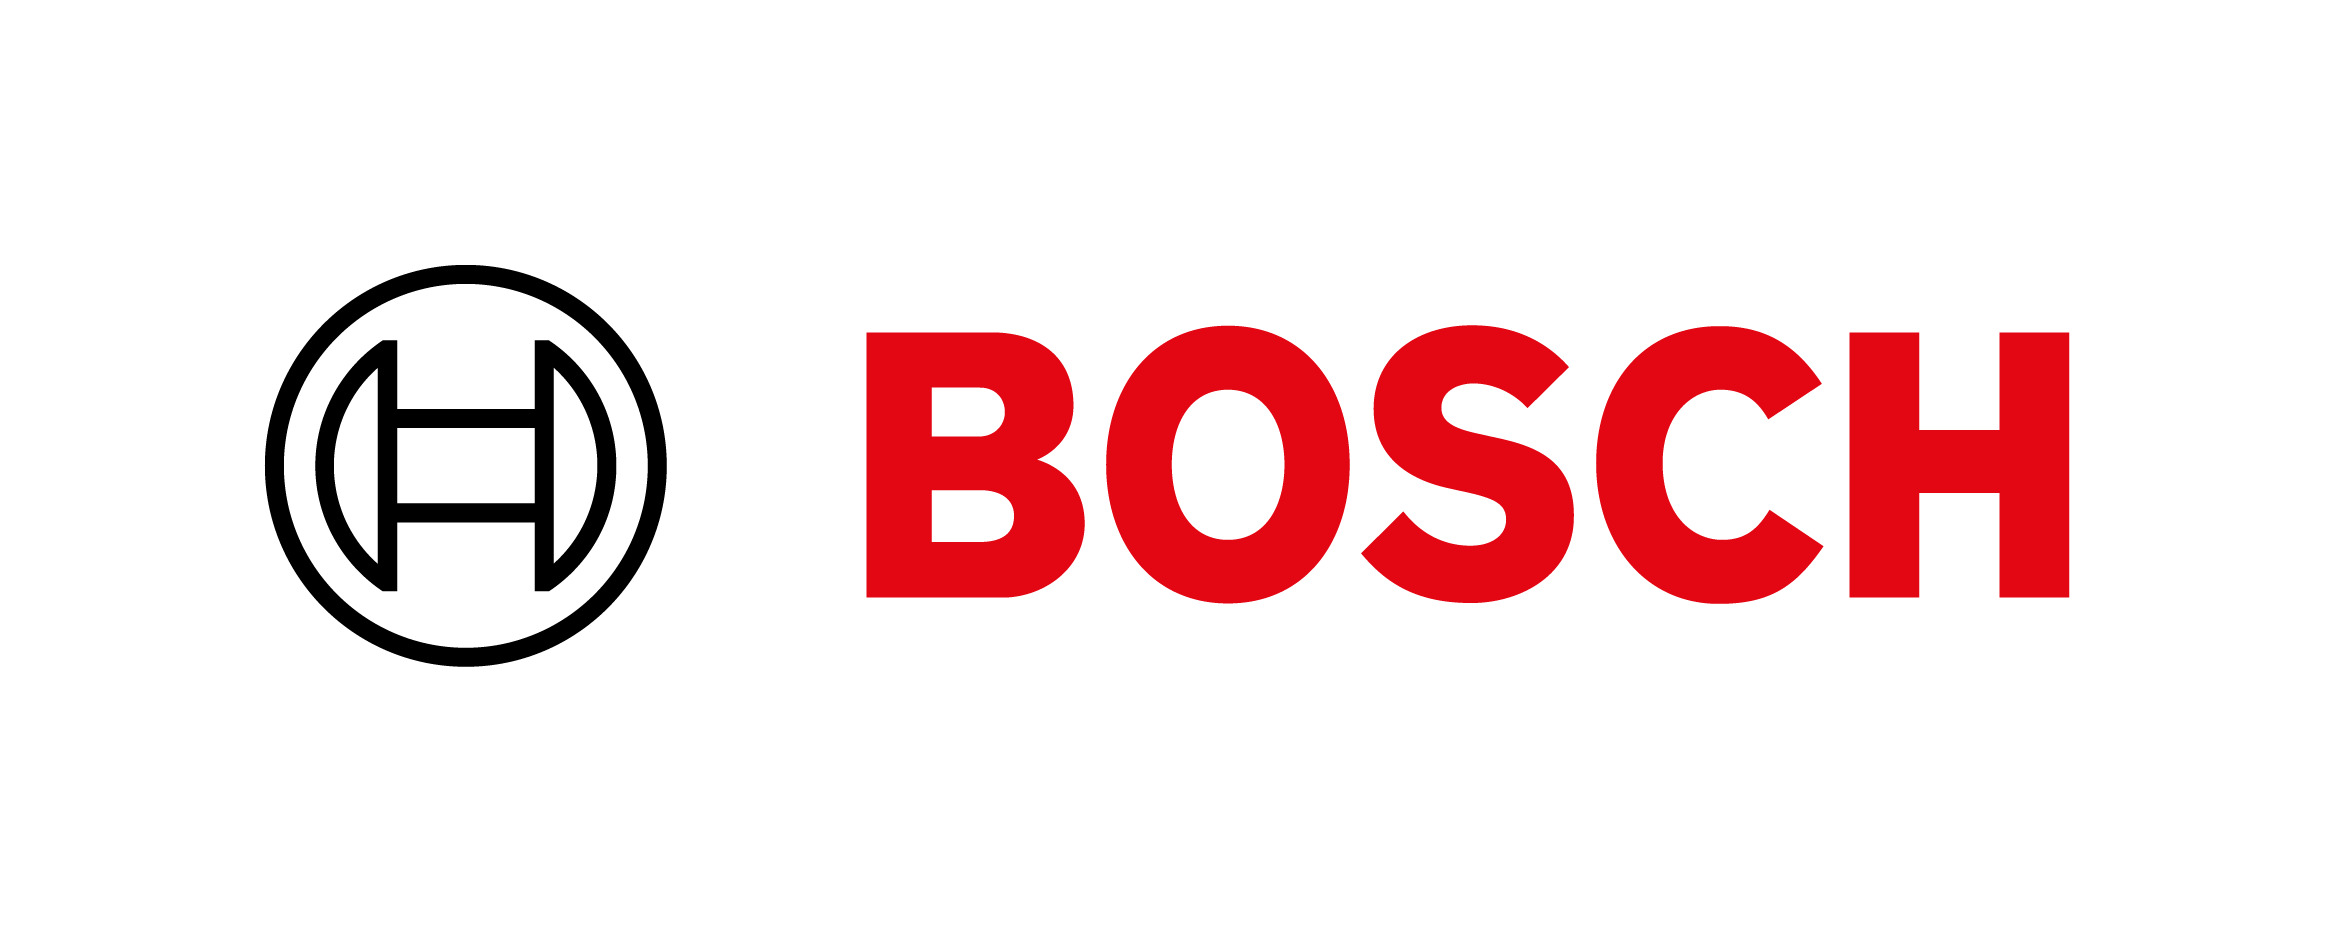 Bosch symbol logo black red transparent